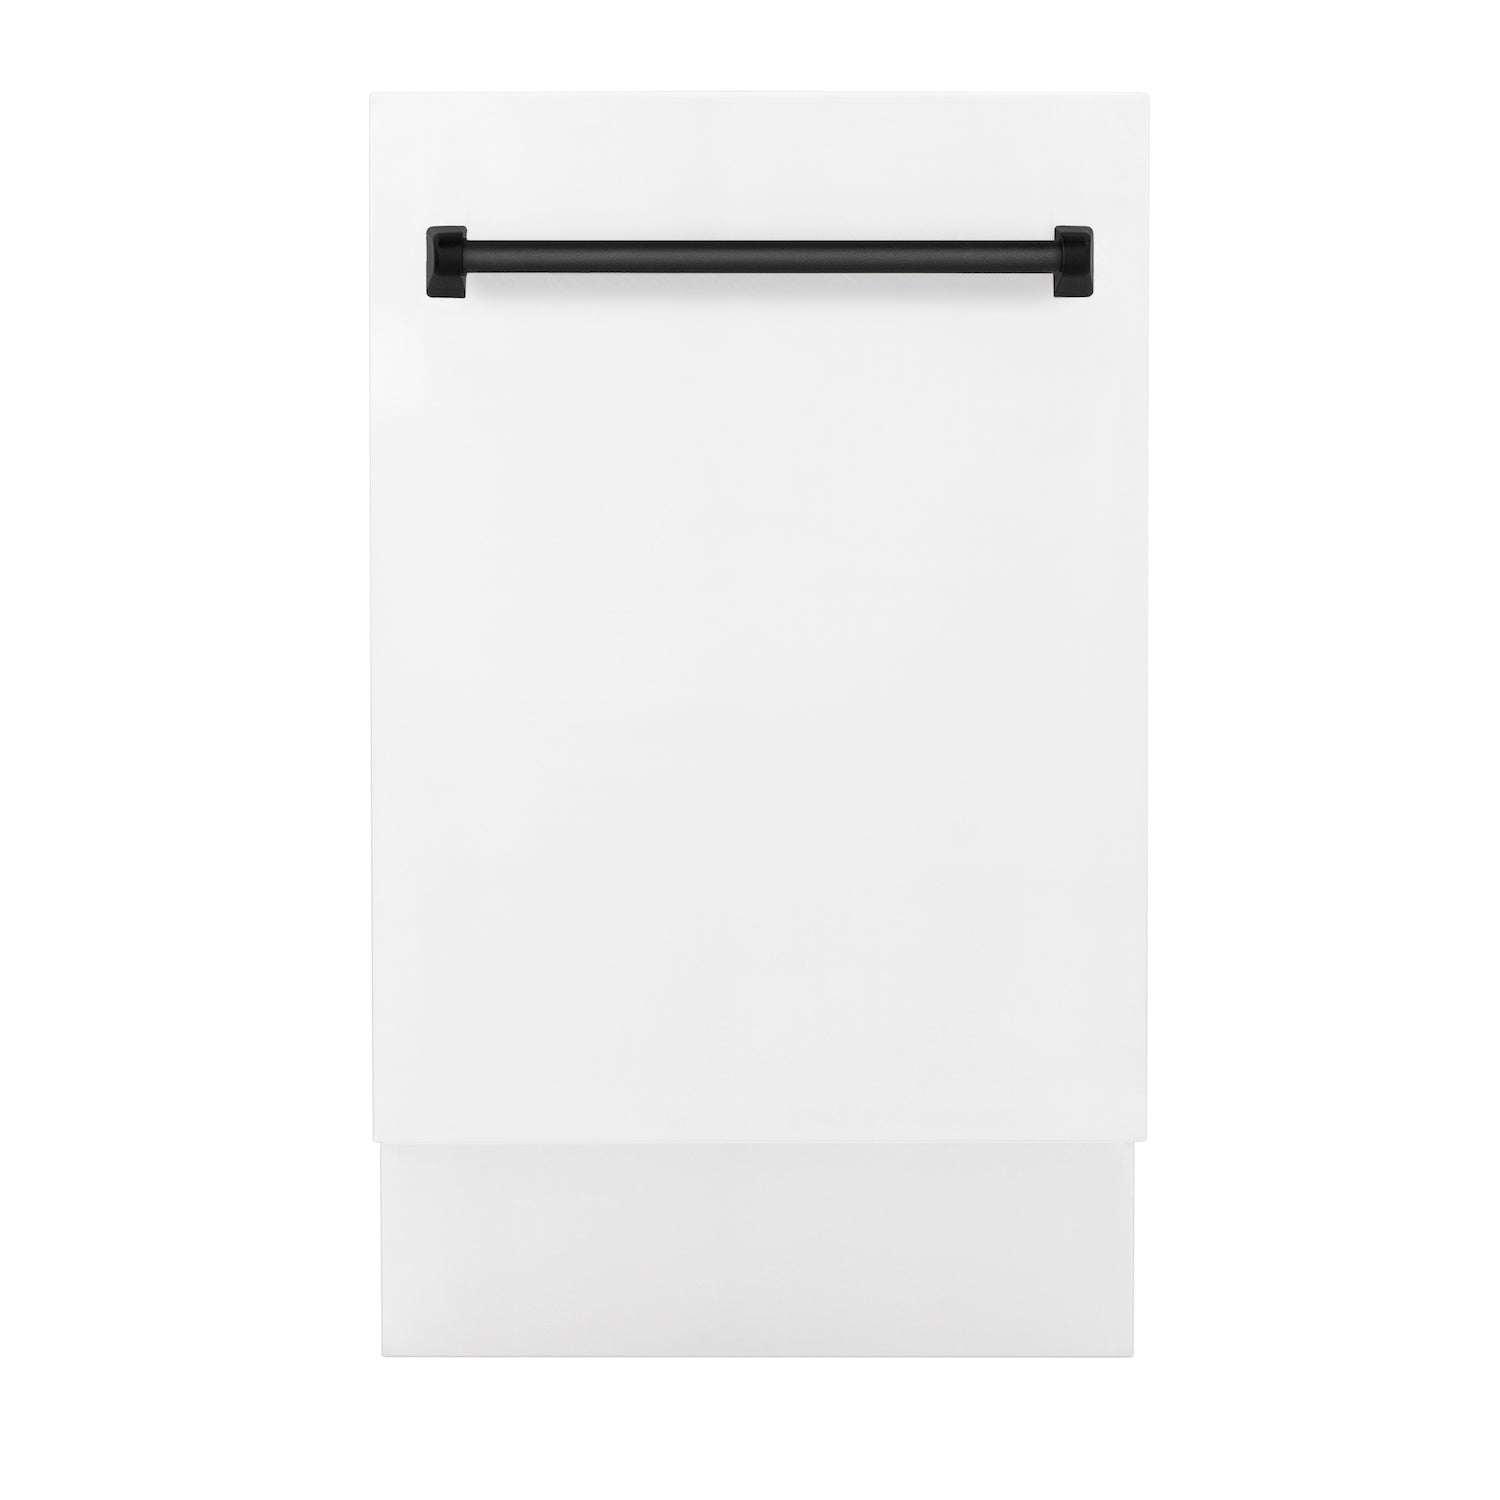 ZLINE Autograph Edition 18" Compact 3rd Rack Top Control Dishwasher in White Matte with Matte Black Handle, 51dBa (DWVZ-WM-18-MB)